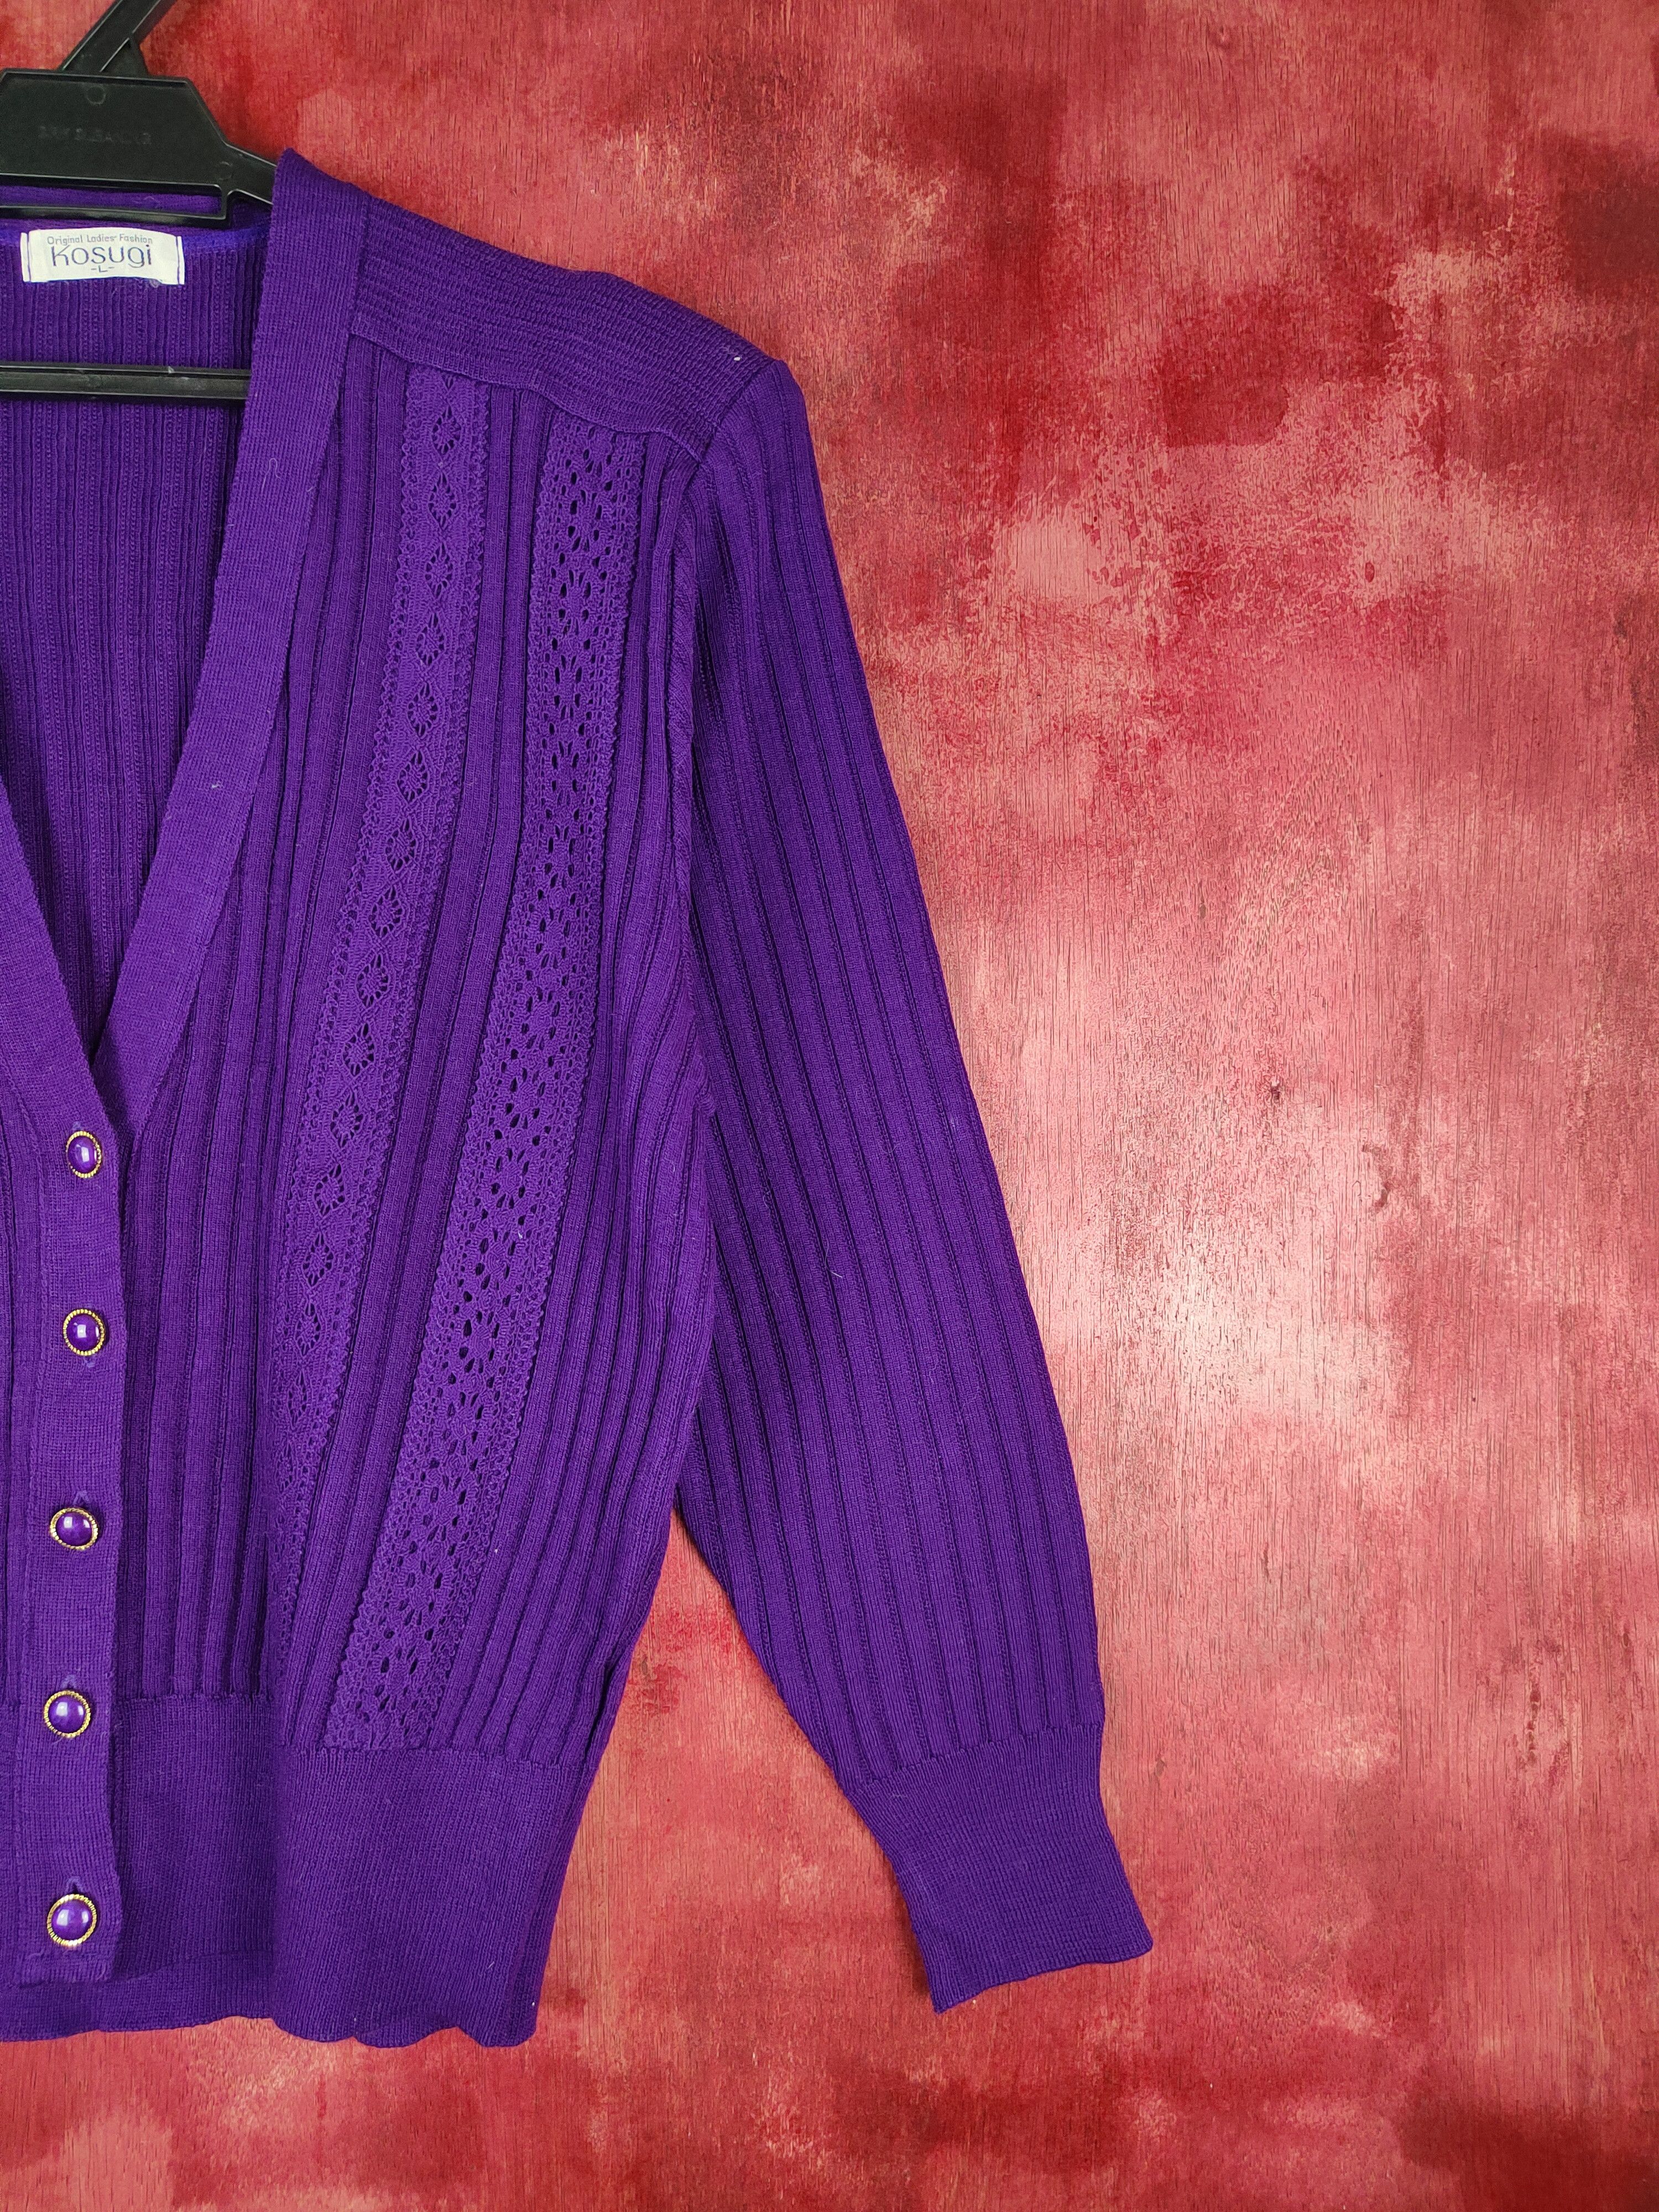 Japanese Brand Kosugi Purple Knitwear Cardigan Crop Tops Size L / US 10 / IT 46 - 5 Thumbnail